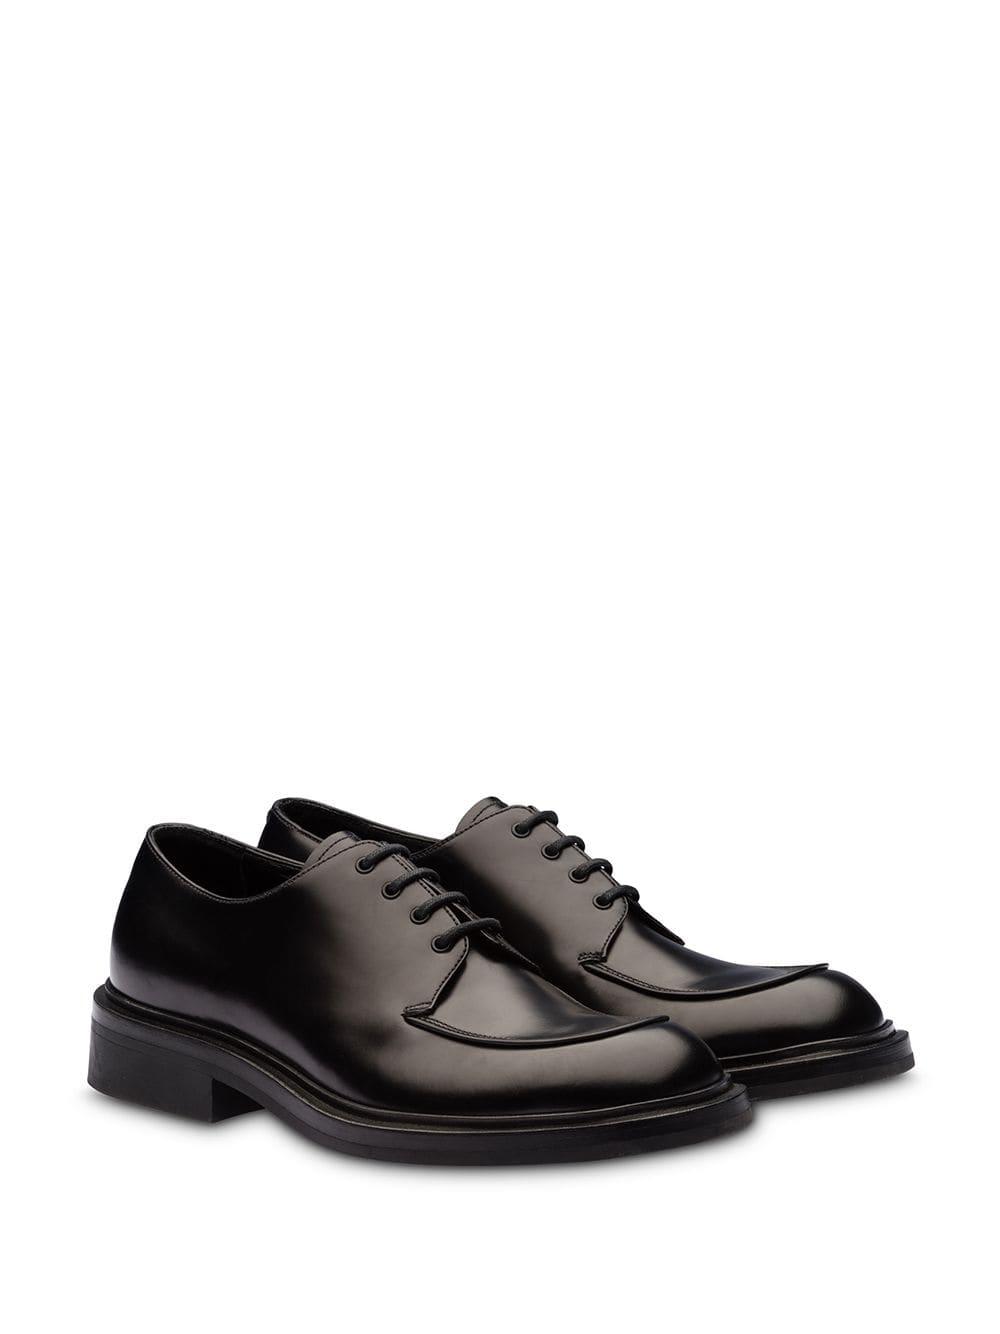 Prada Rubber Sole Derby Shoes in Black for Men - Lyst